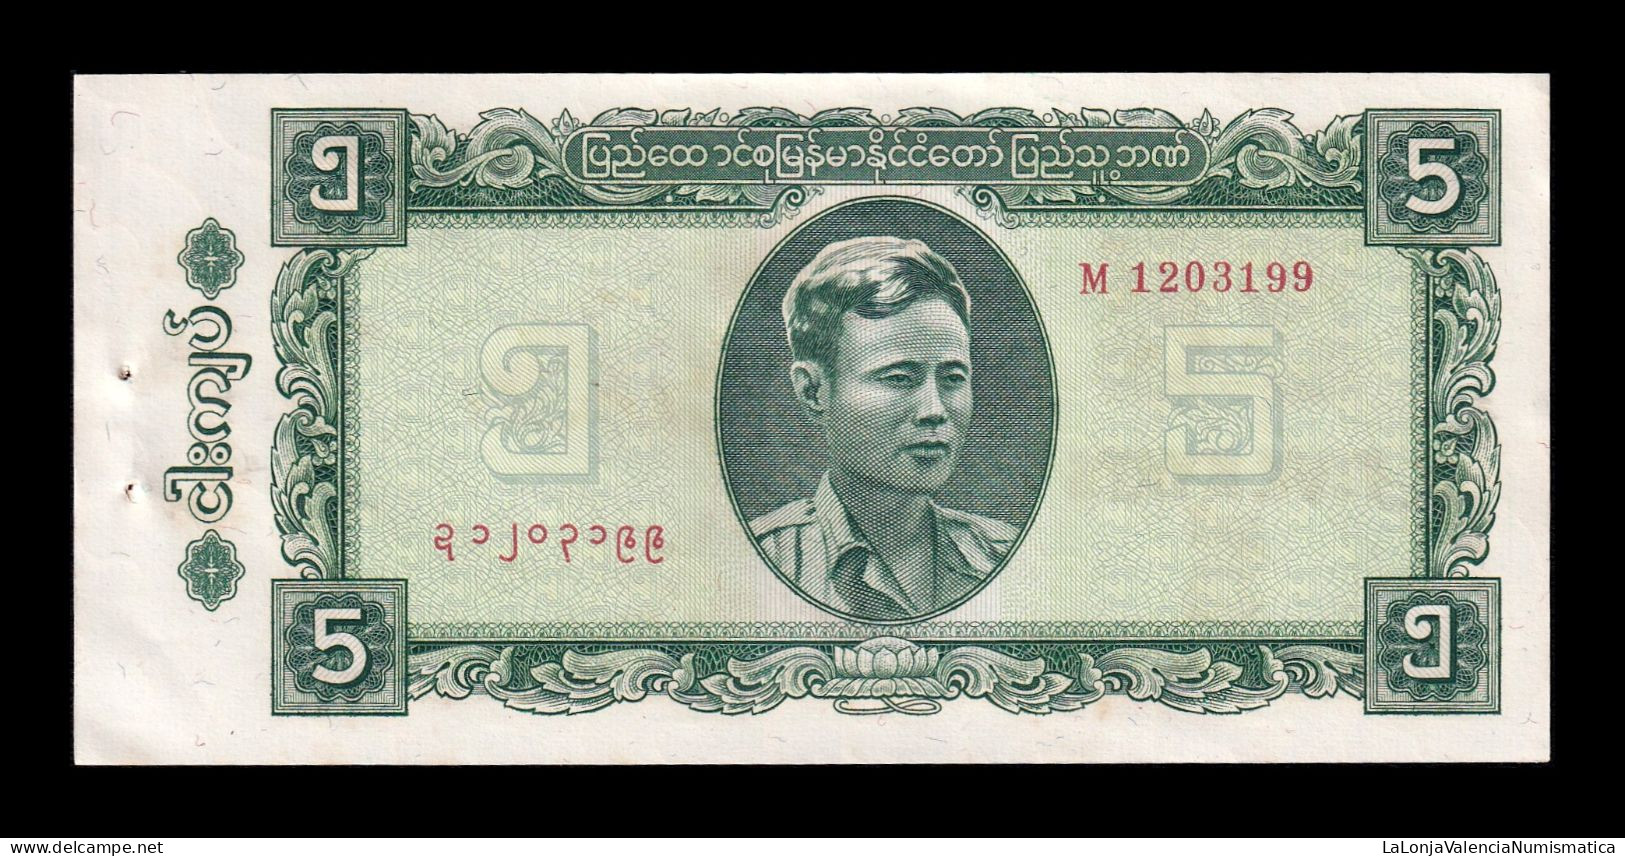 Burma Birmina 5 Kyats ND (1965) Pick 53 Sc Unc - Myanmar